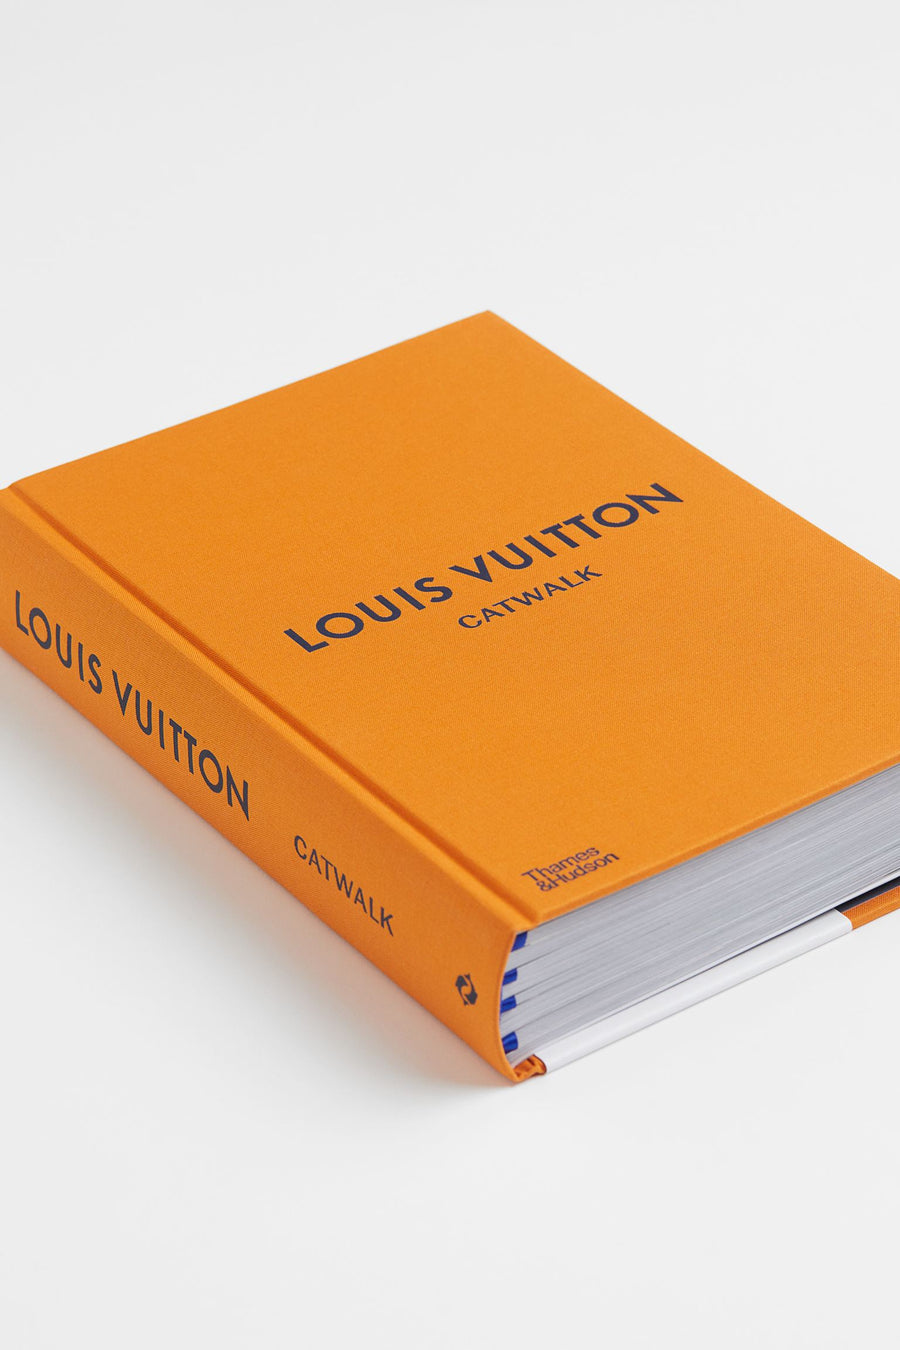 Louis Vuitton Catwalk Book Thames And Hudson